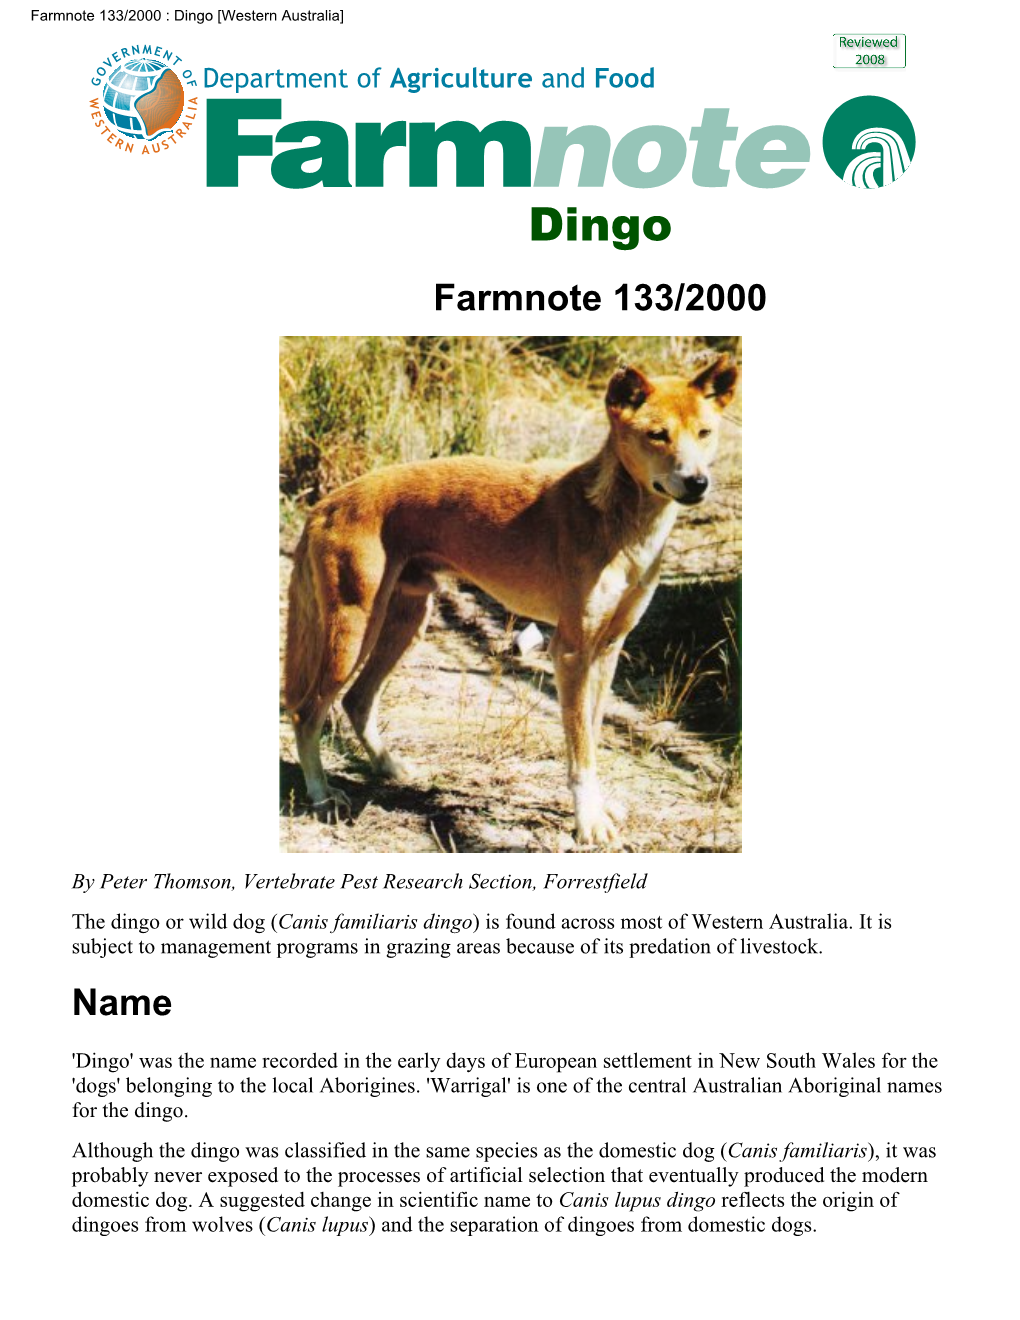 Dingo [Western Australia]